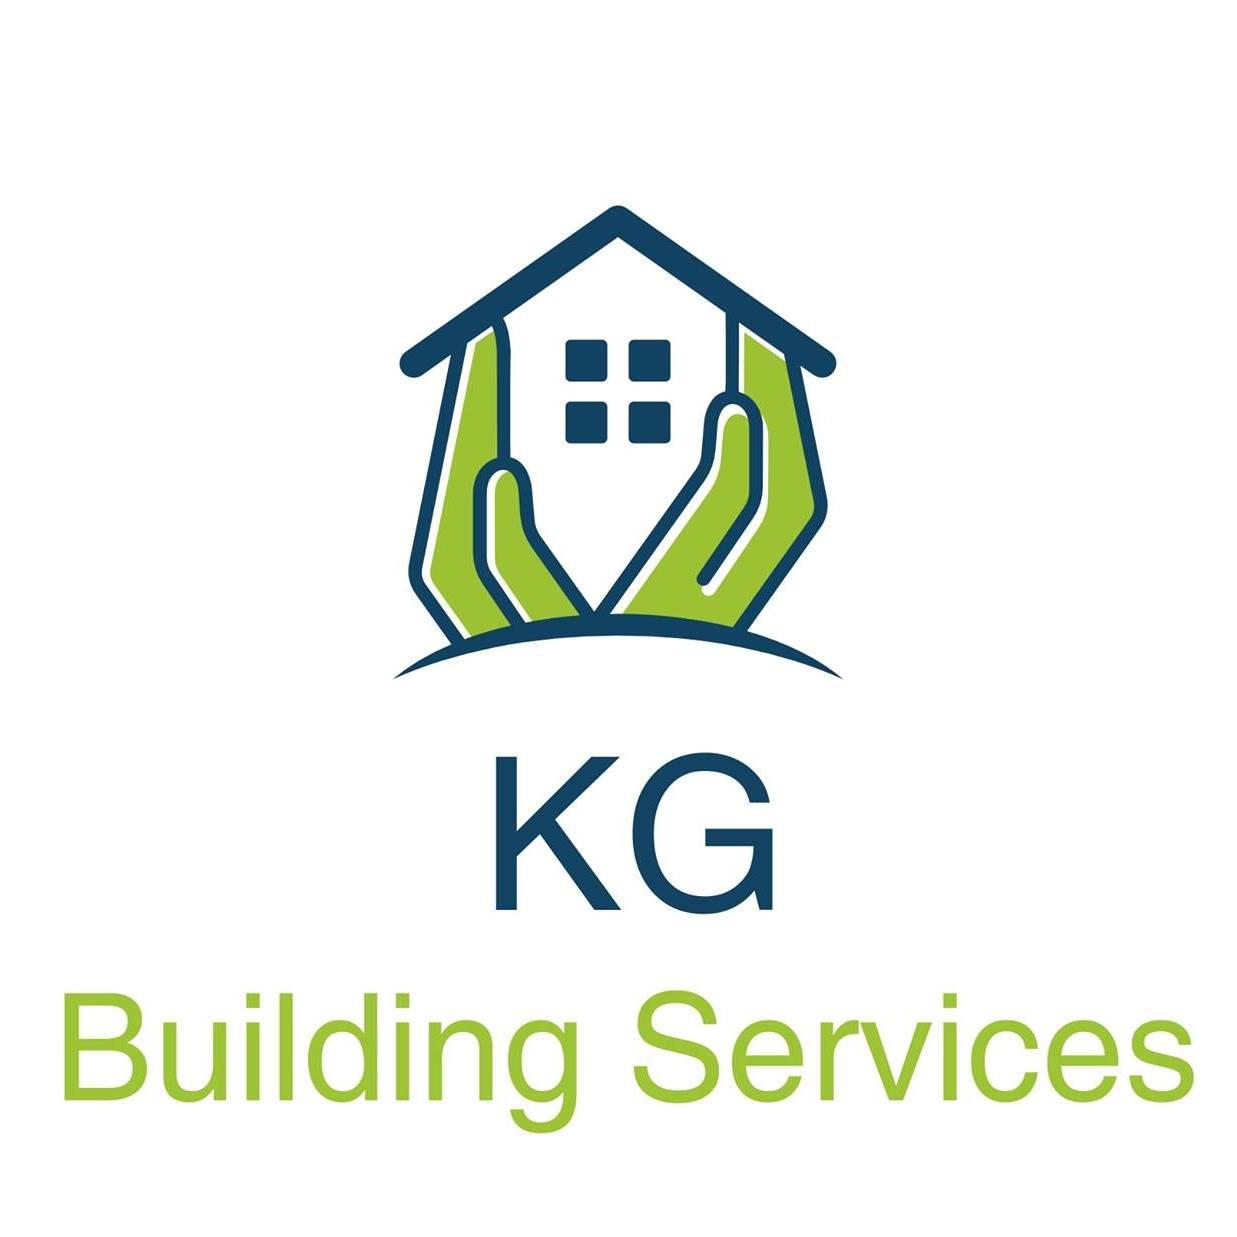 KG Building Services - Glasgow, Lanarkshire G75 8UB - 07539 269970 | ShowMeLocal.com